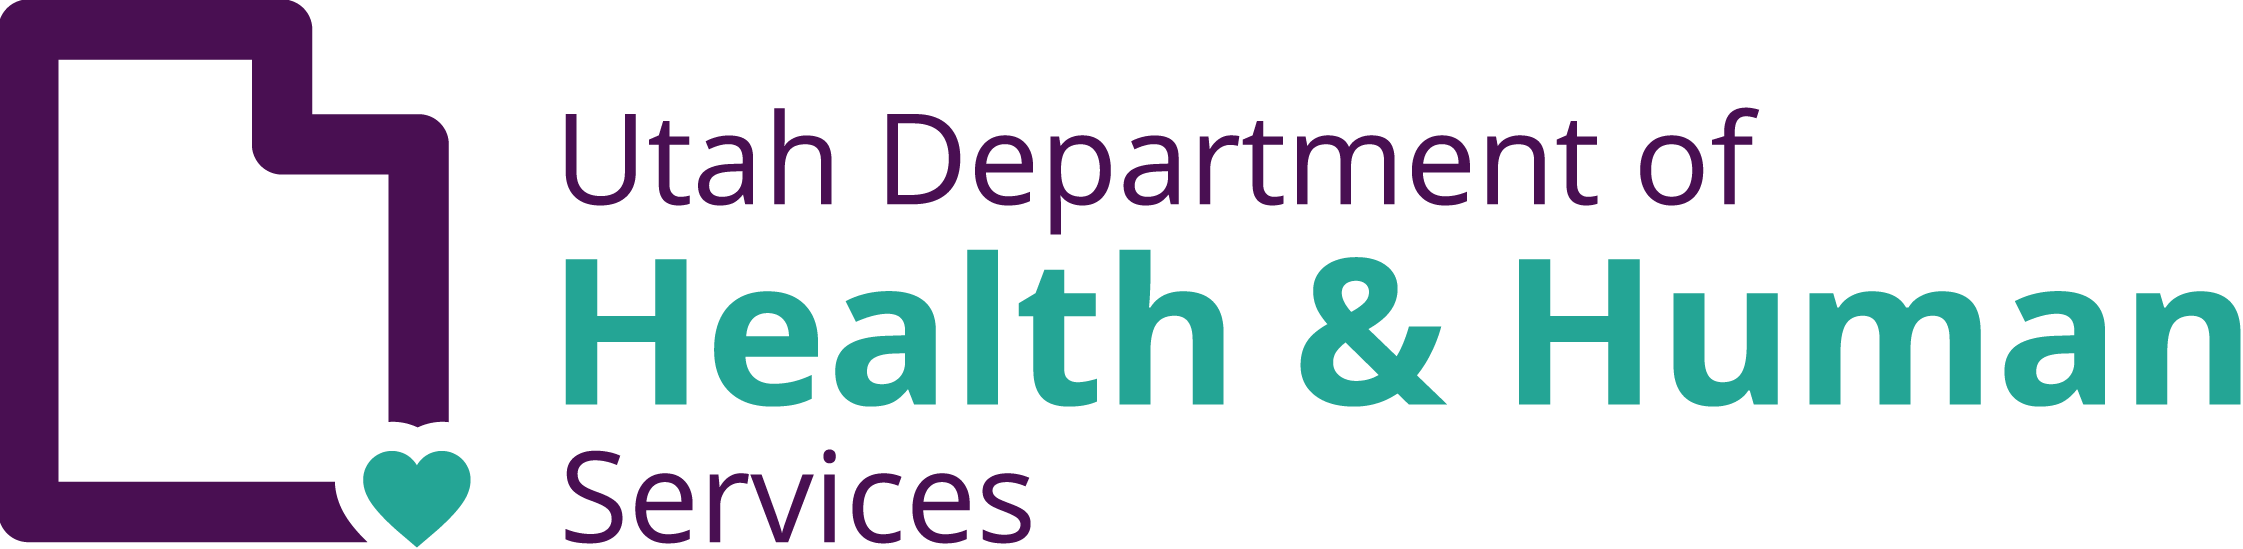 Utah Department of Health & Human Services logo